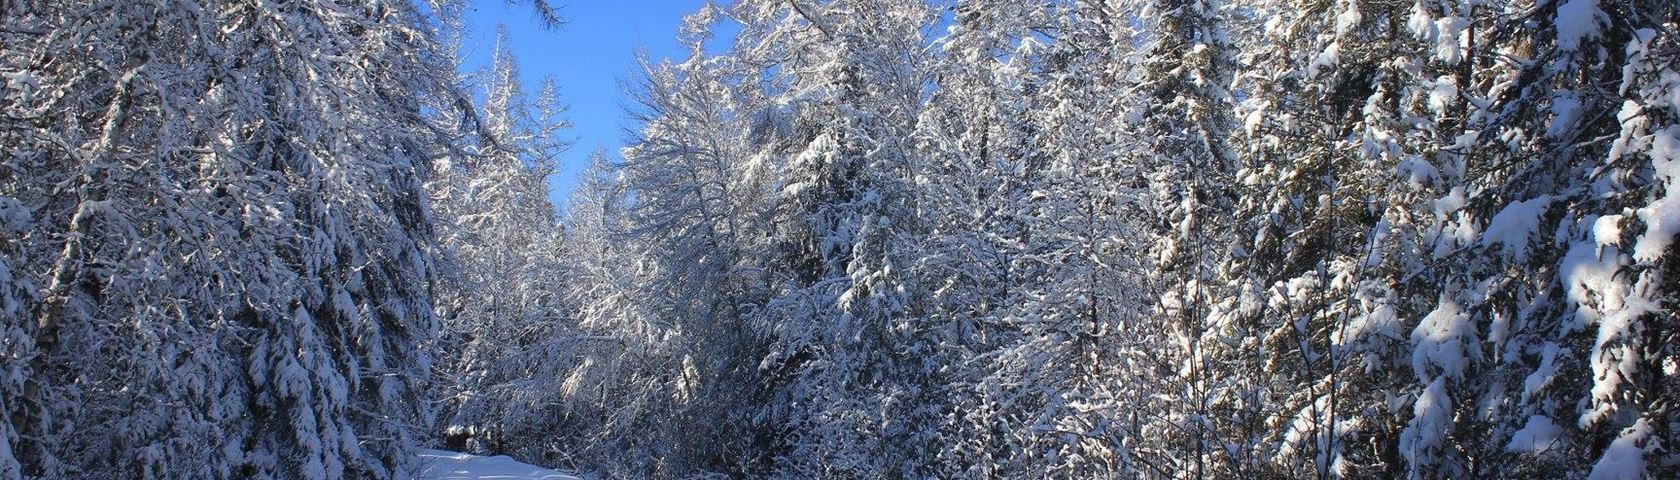 Tree with Snow